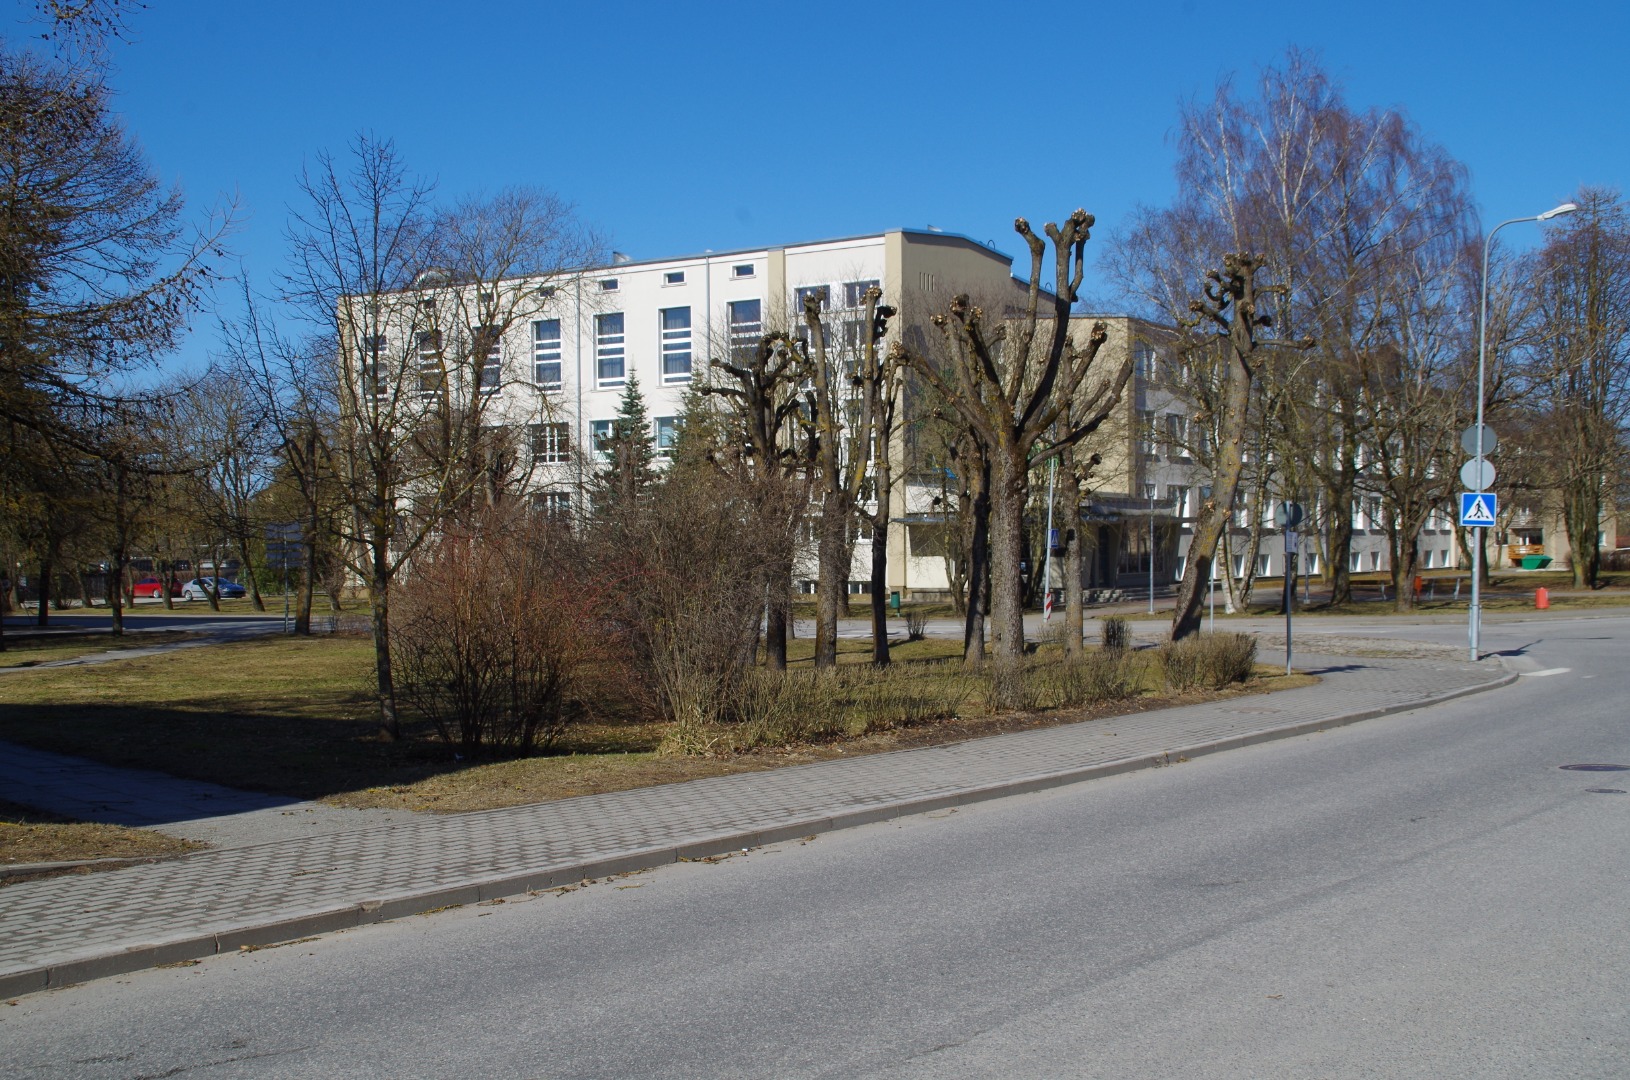 Lääne-Viru county Rakvere 2. (with Russian language of study) Secondary school building rephoto